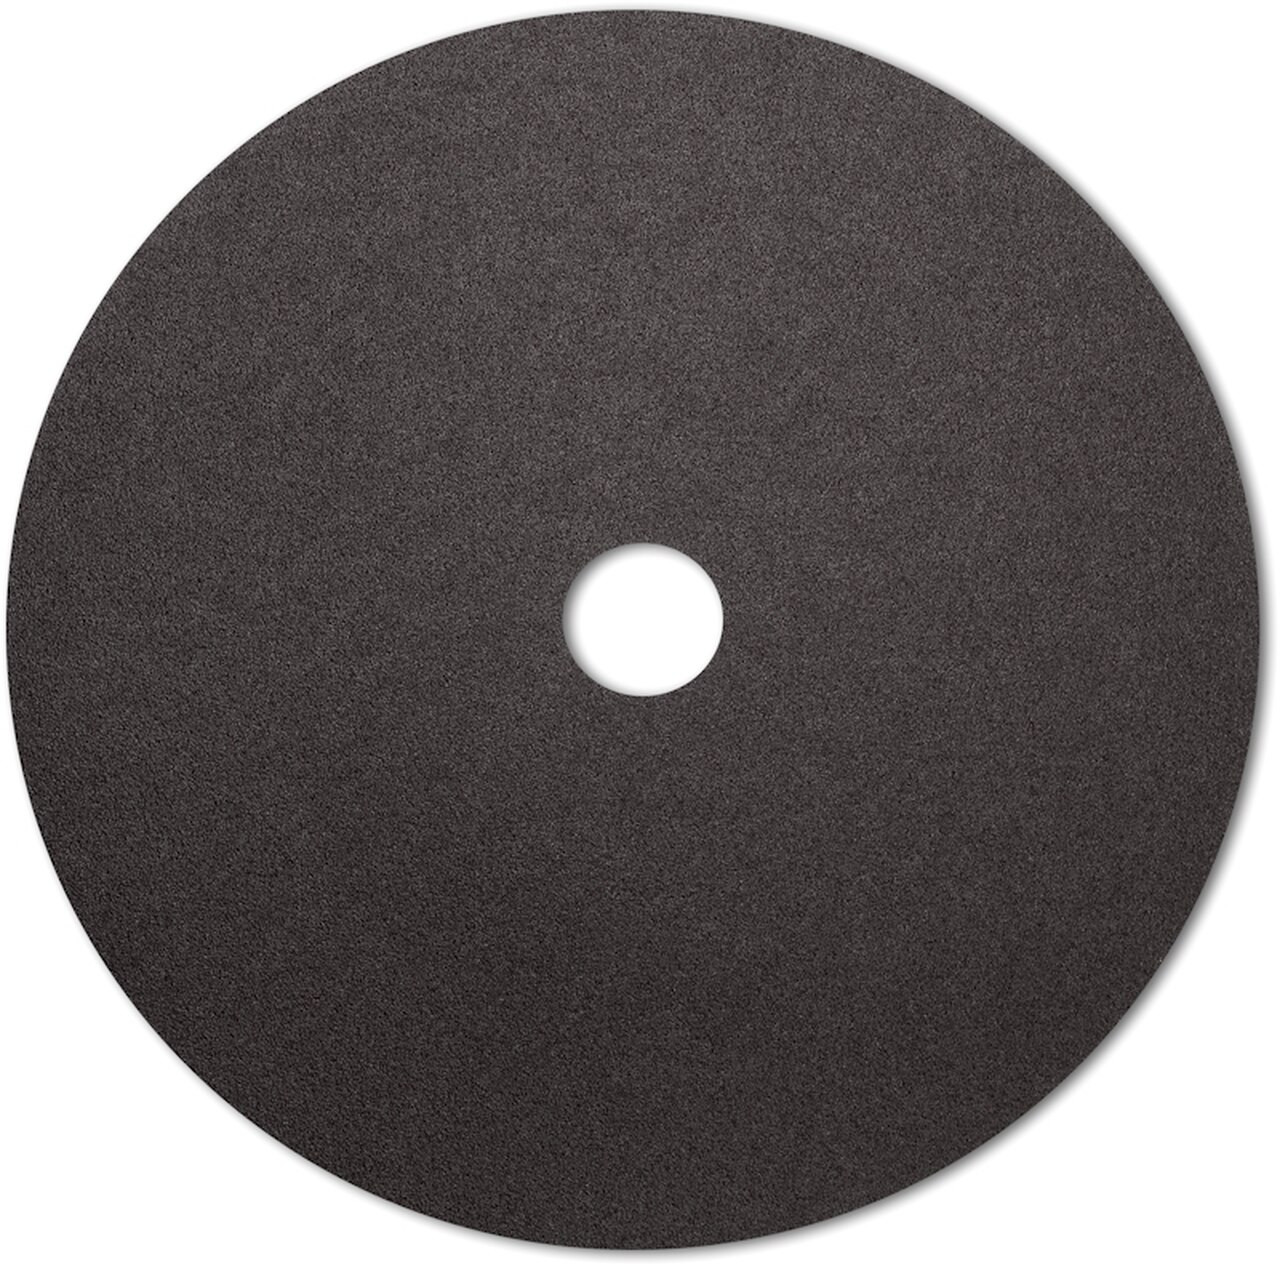 Mercer Cloth Sanding Discs 16" x 2" Hole